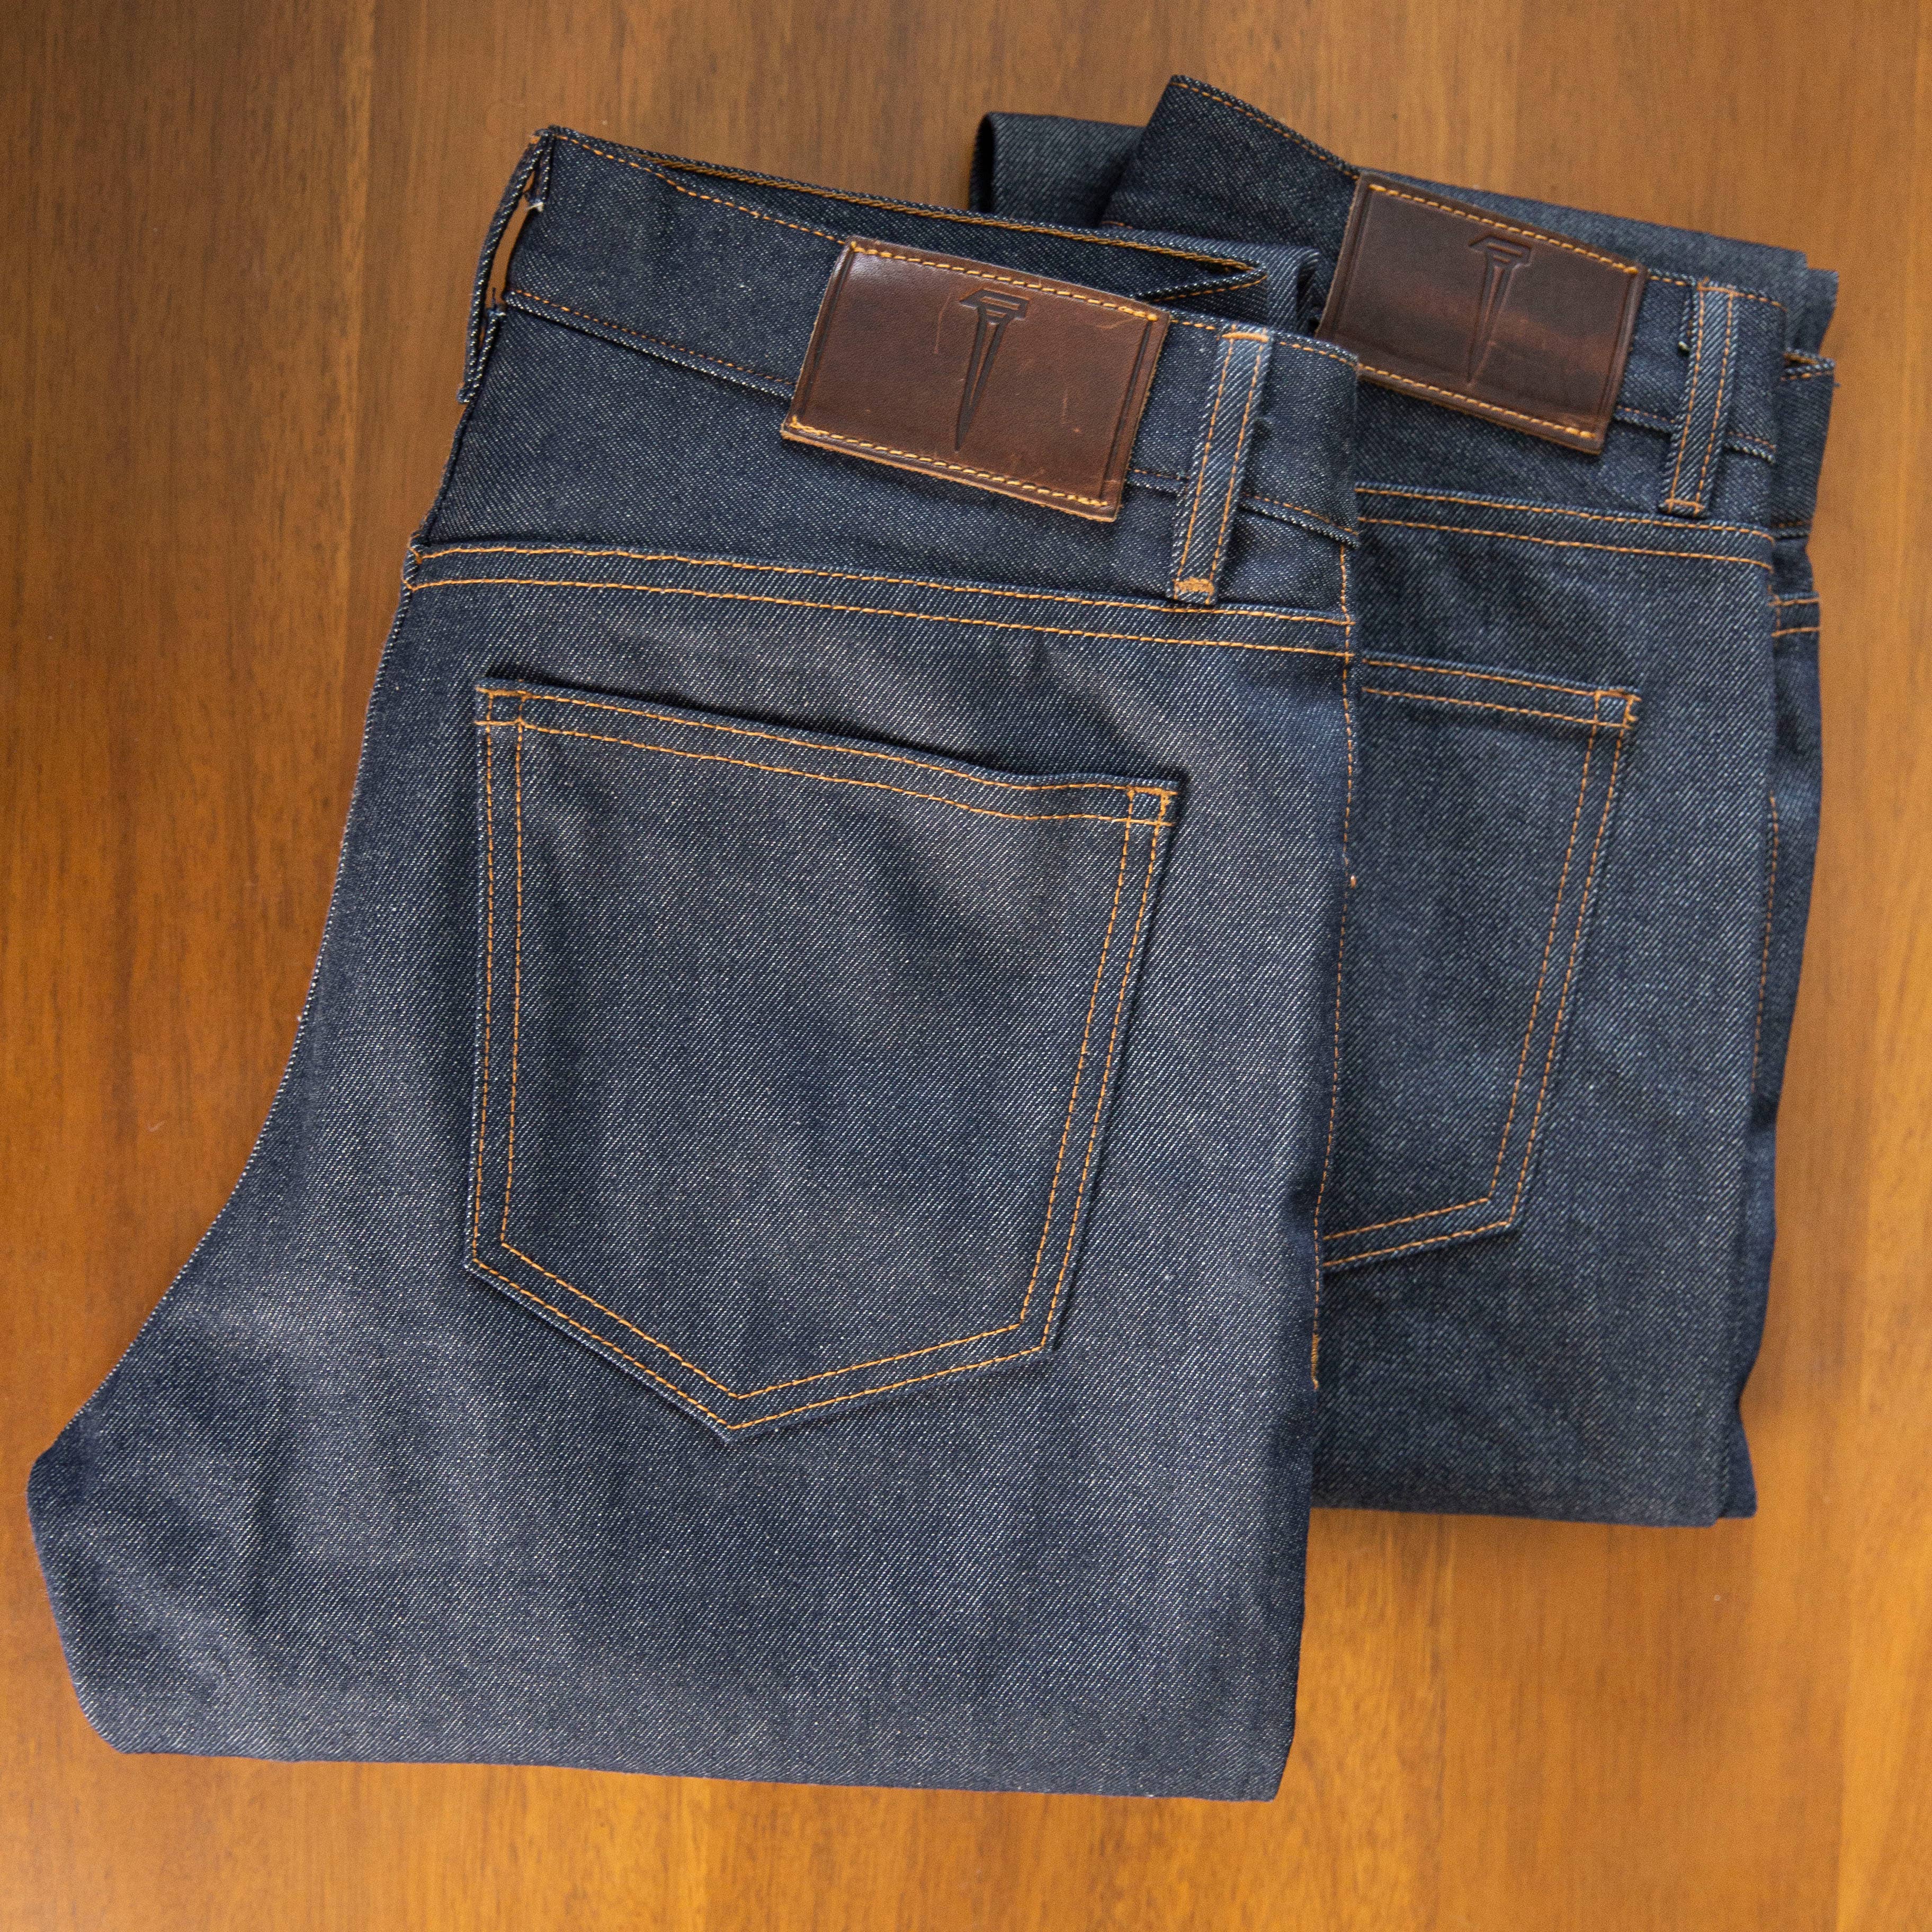 Levi's Selvedge Raw Denim Jeans 514 30x30 Two Horse Brand b2 | eBay